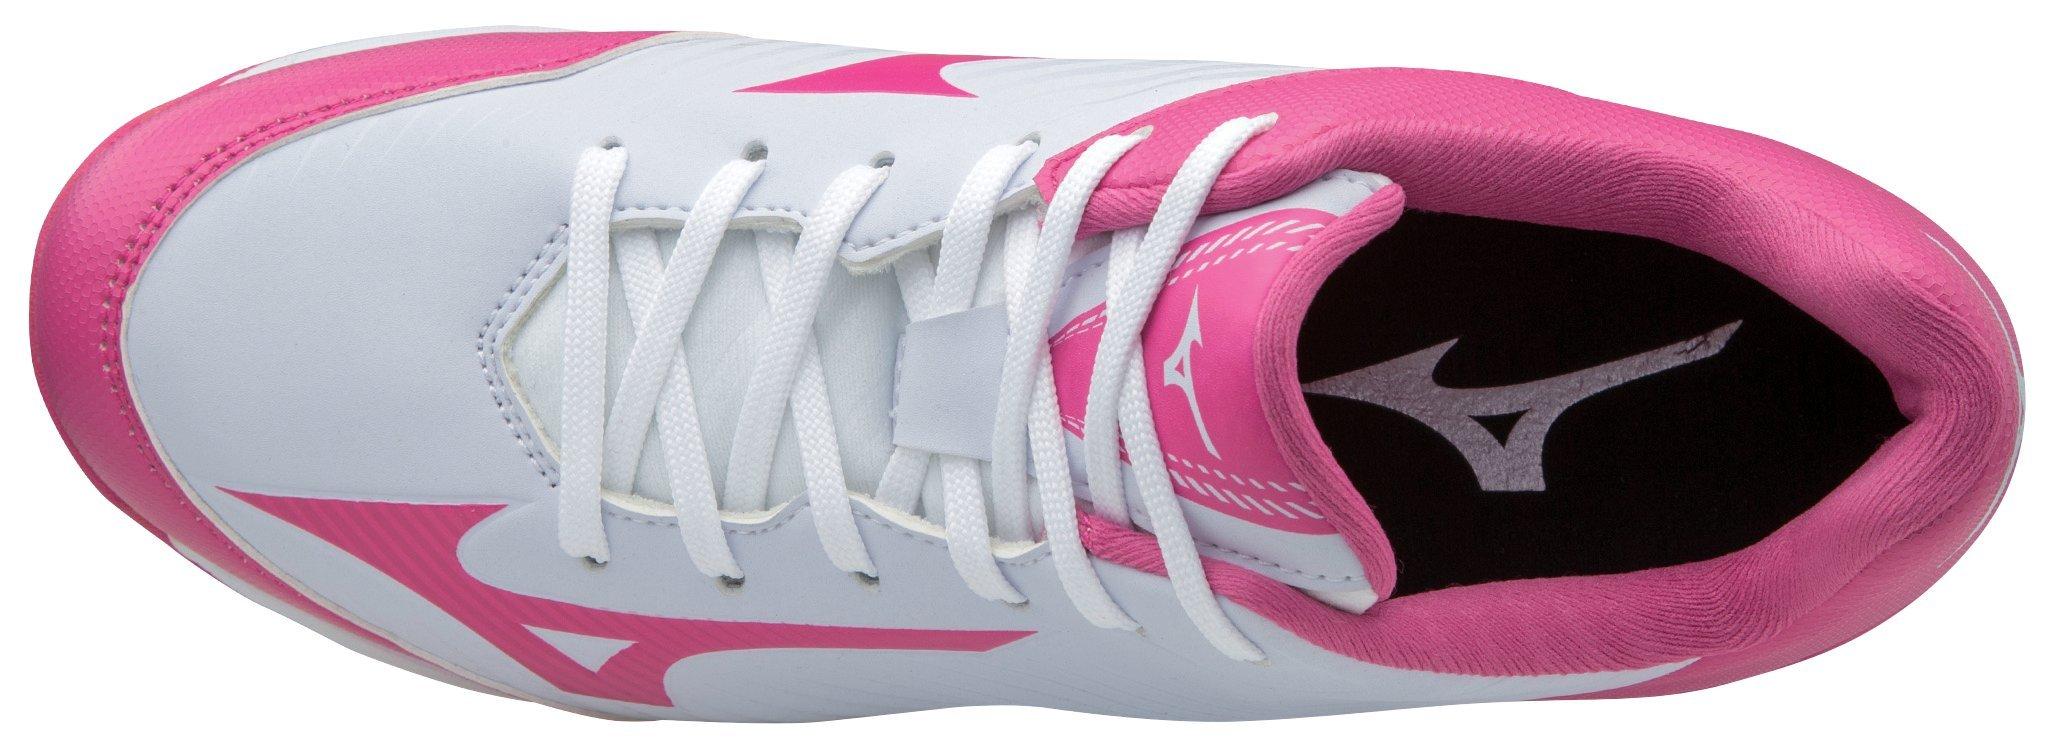 Mizuno Womens 9-Spike Advanced Finch Franchise 7 Fastpitch Softball Cleat Shoe